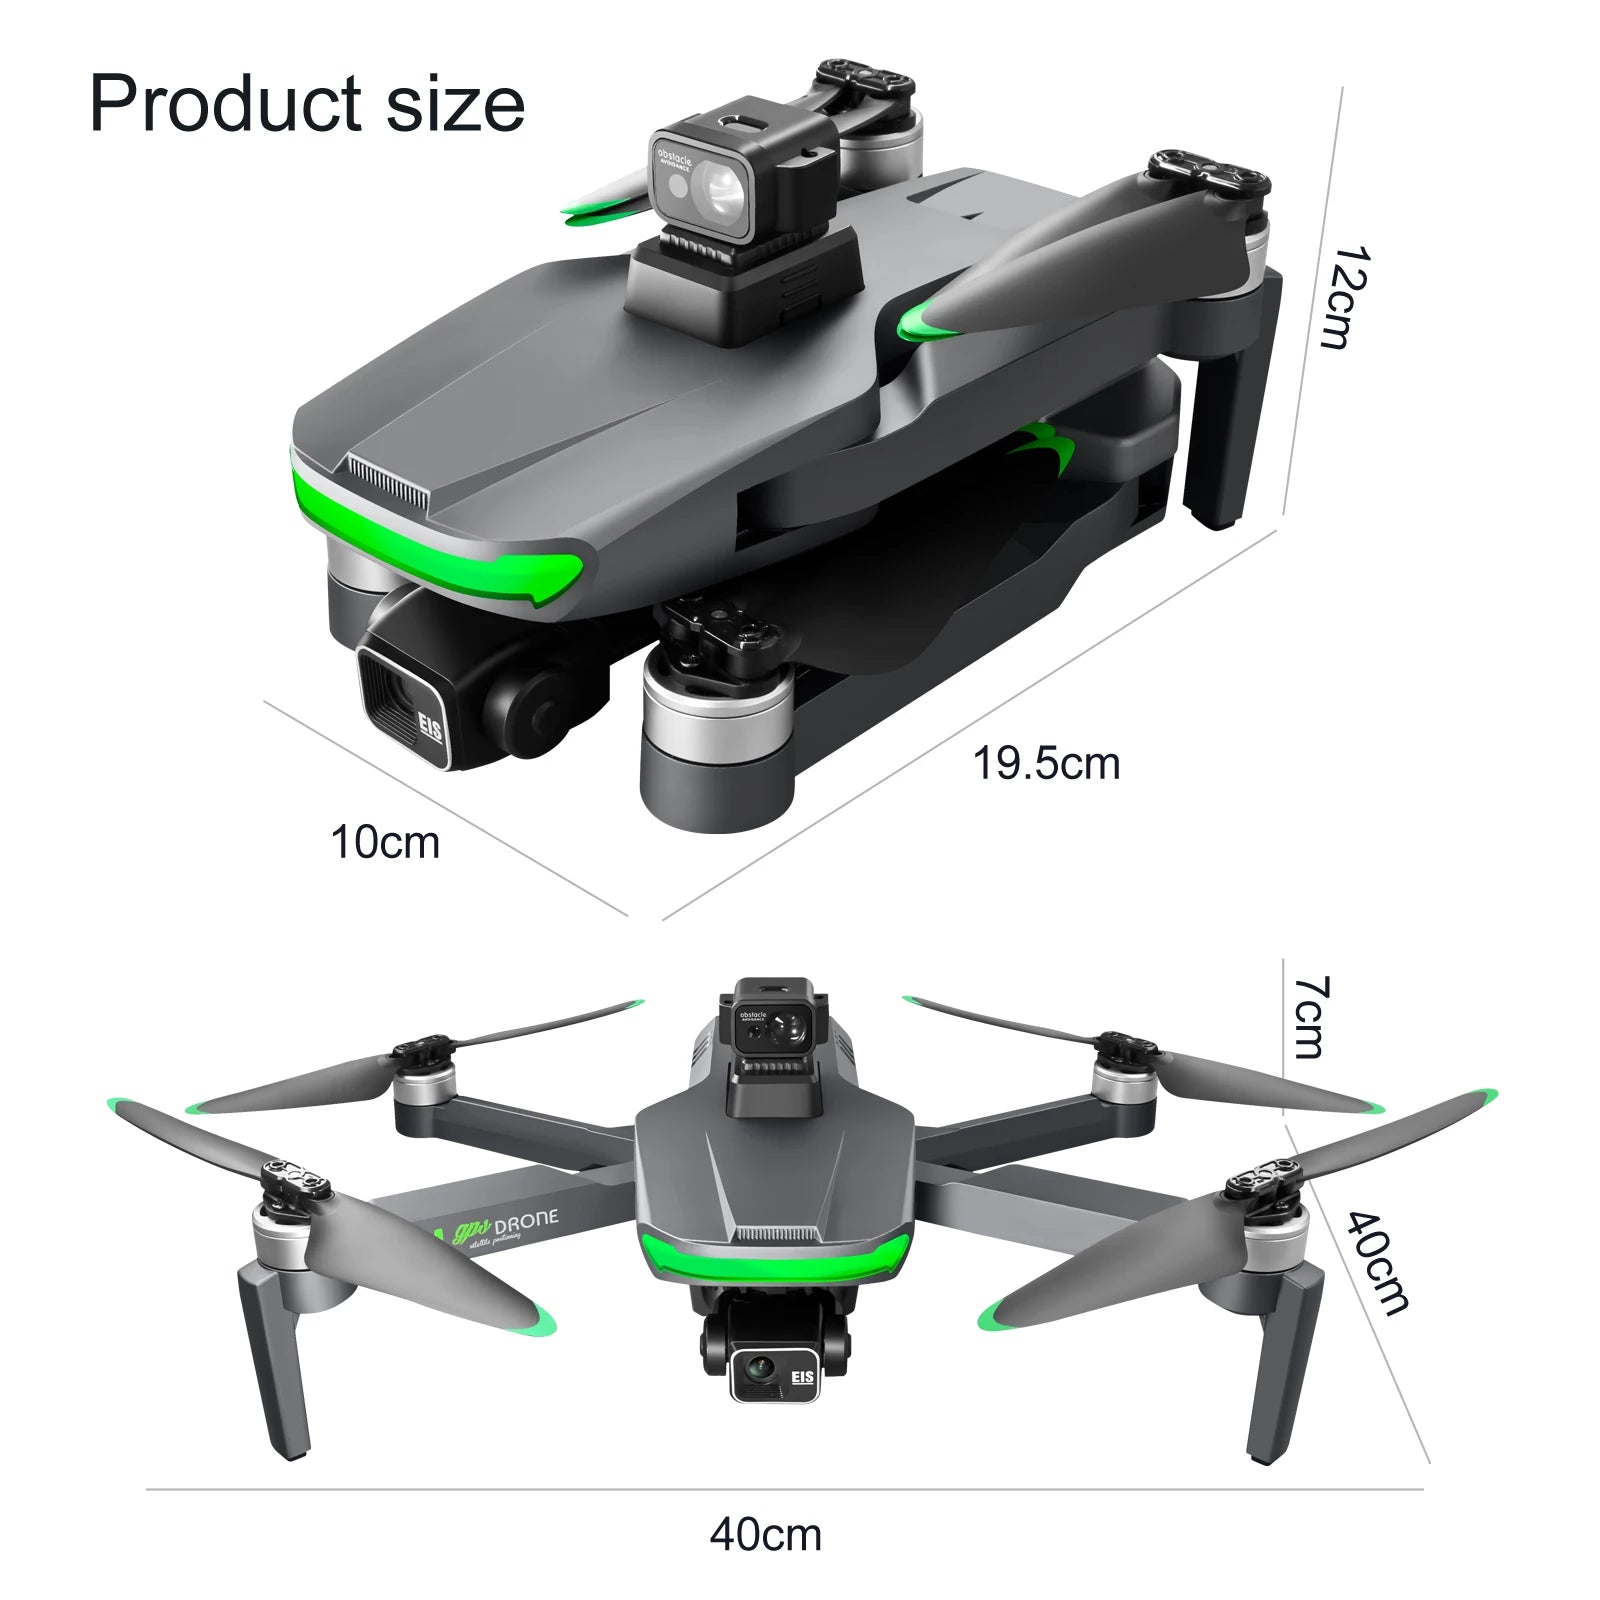 S155 Pro GPS Drone, Product size Fl' 19.5cm 1Ocm obslach 3 EIS 4